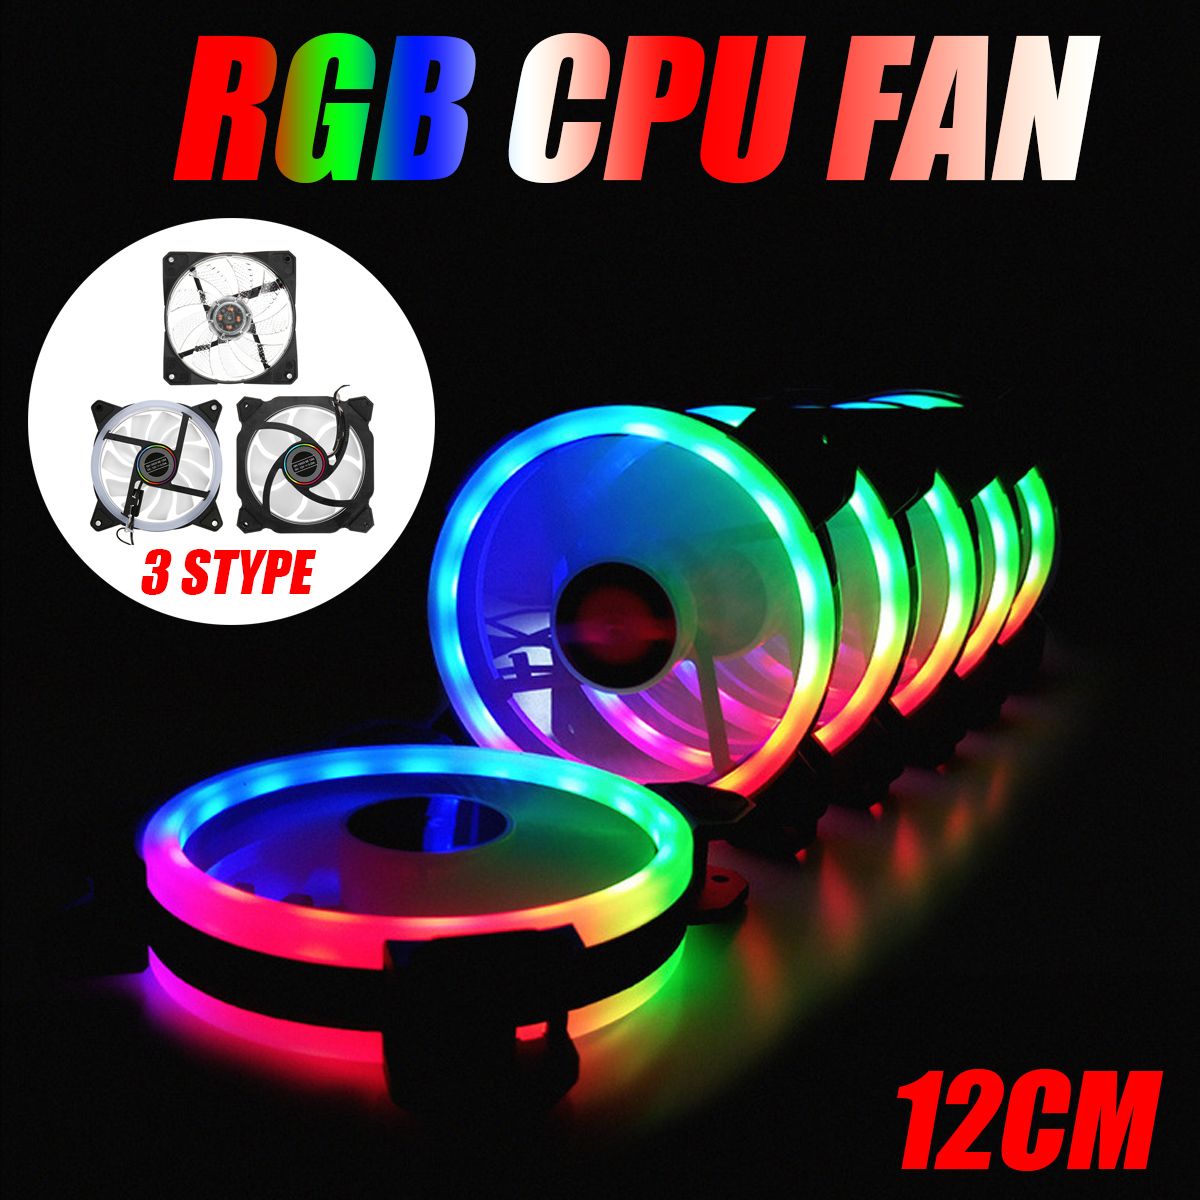 120mm-LED-Cooling-Fan-RGB-DC-12V-3Pin-Brushless-Cooler-For-DIY-Computer-Case-PC-CPU-1635296